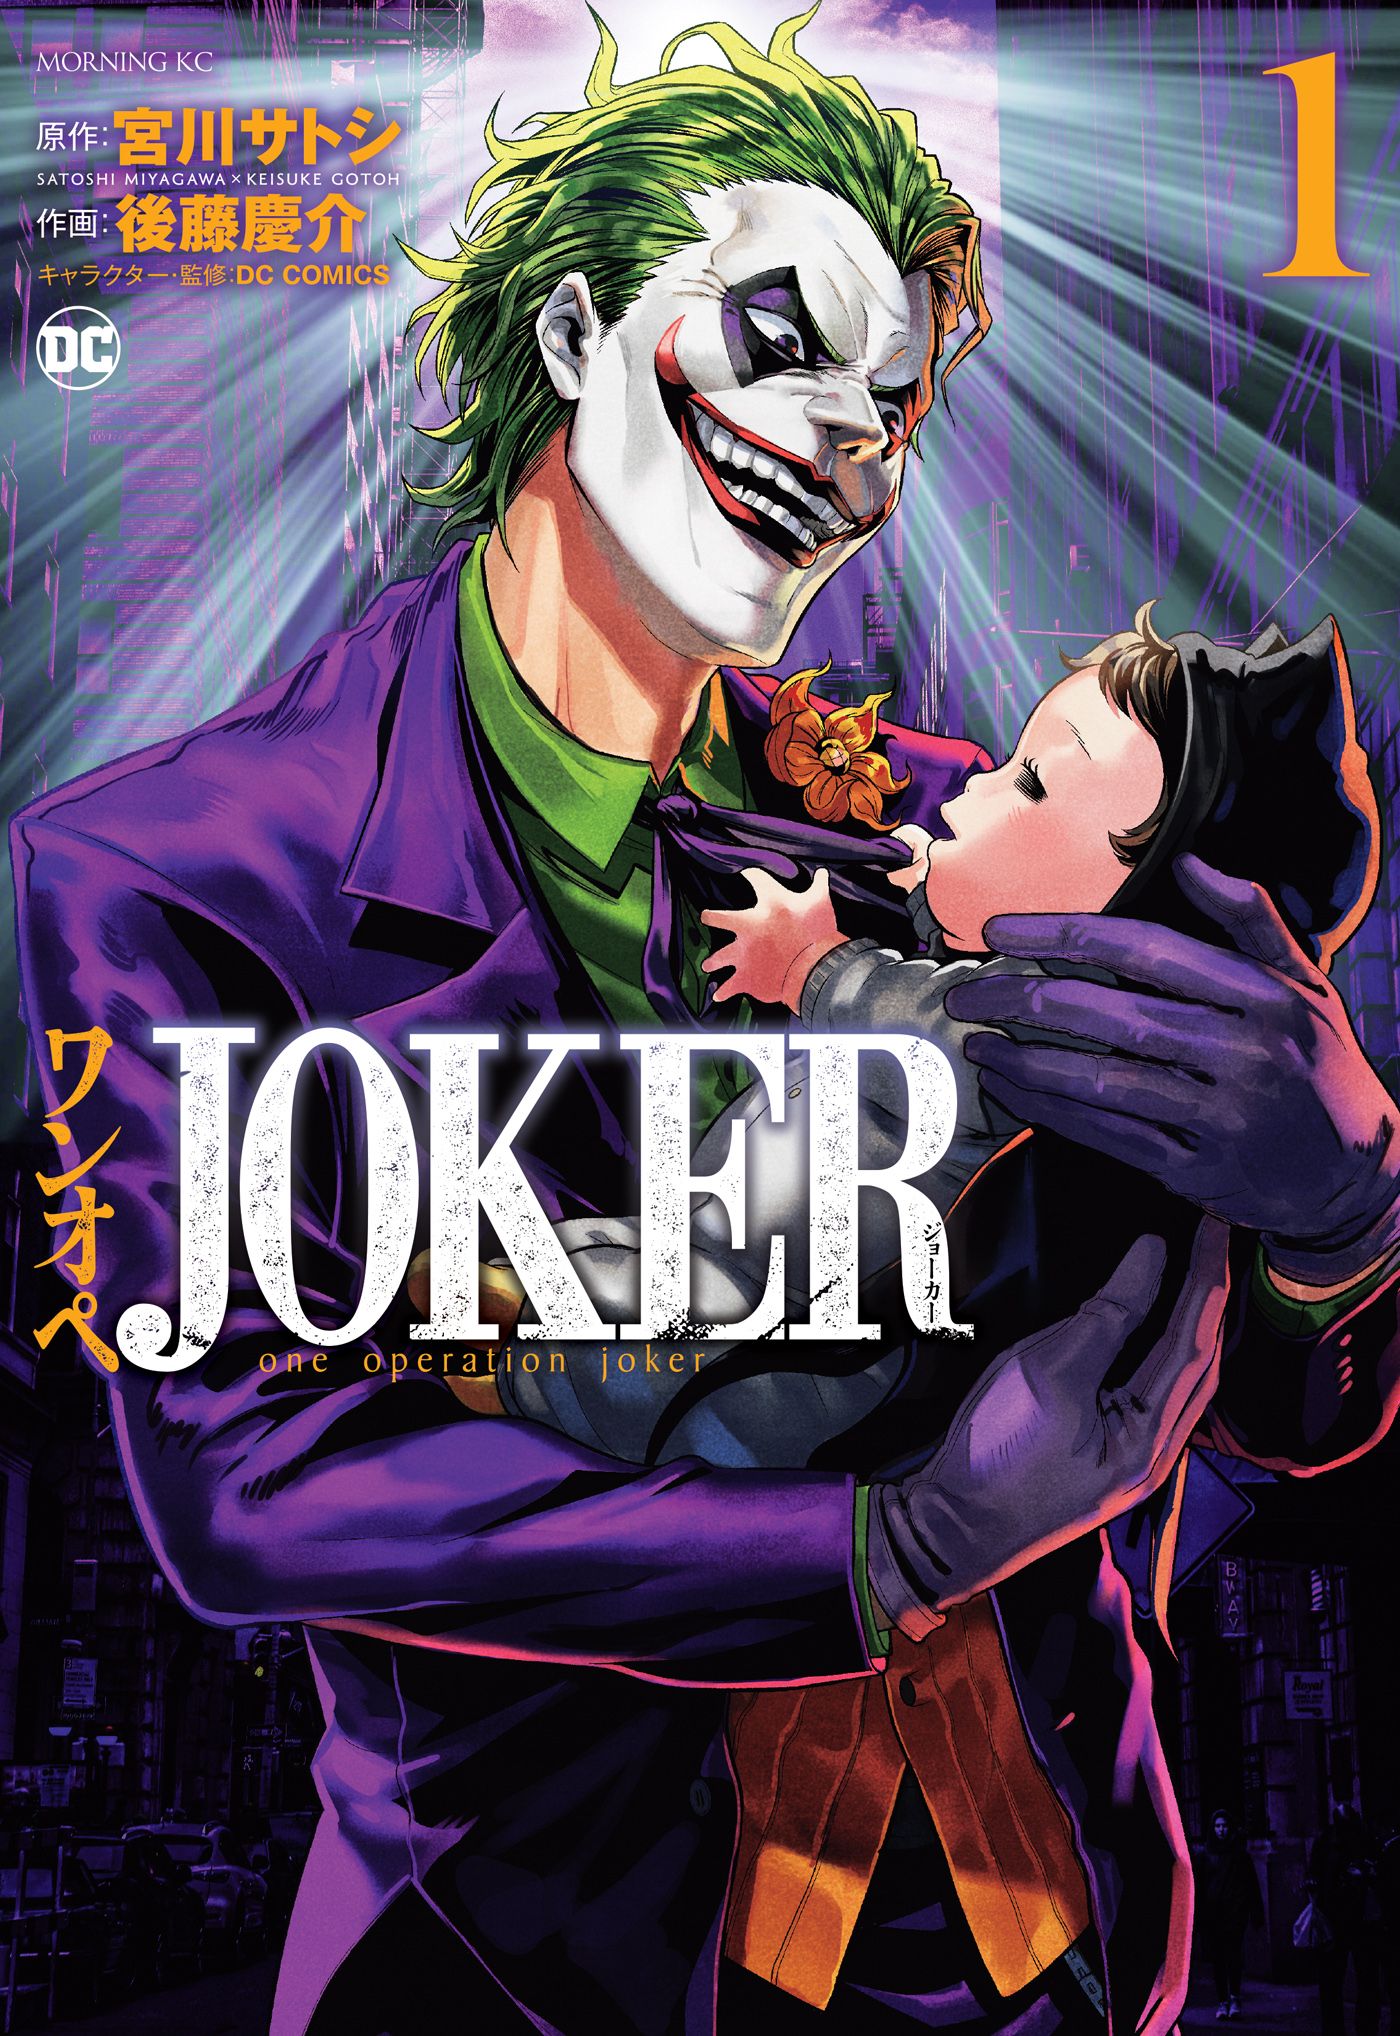 One Operation Joker Vol 1